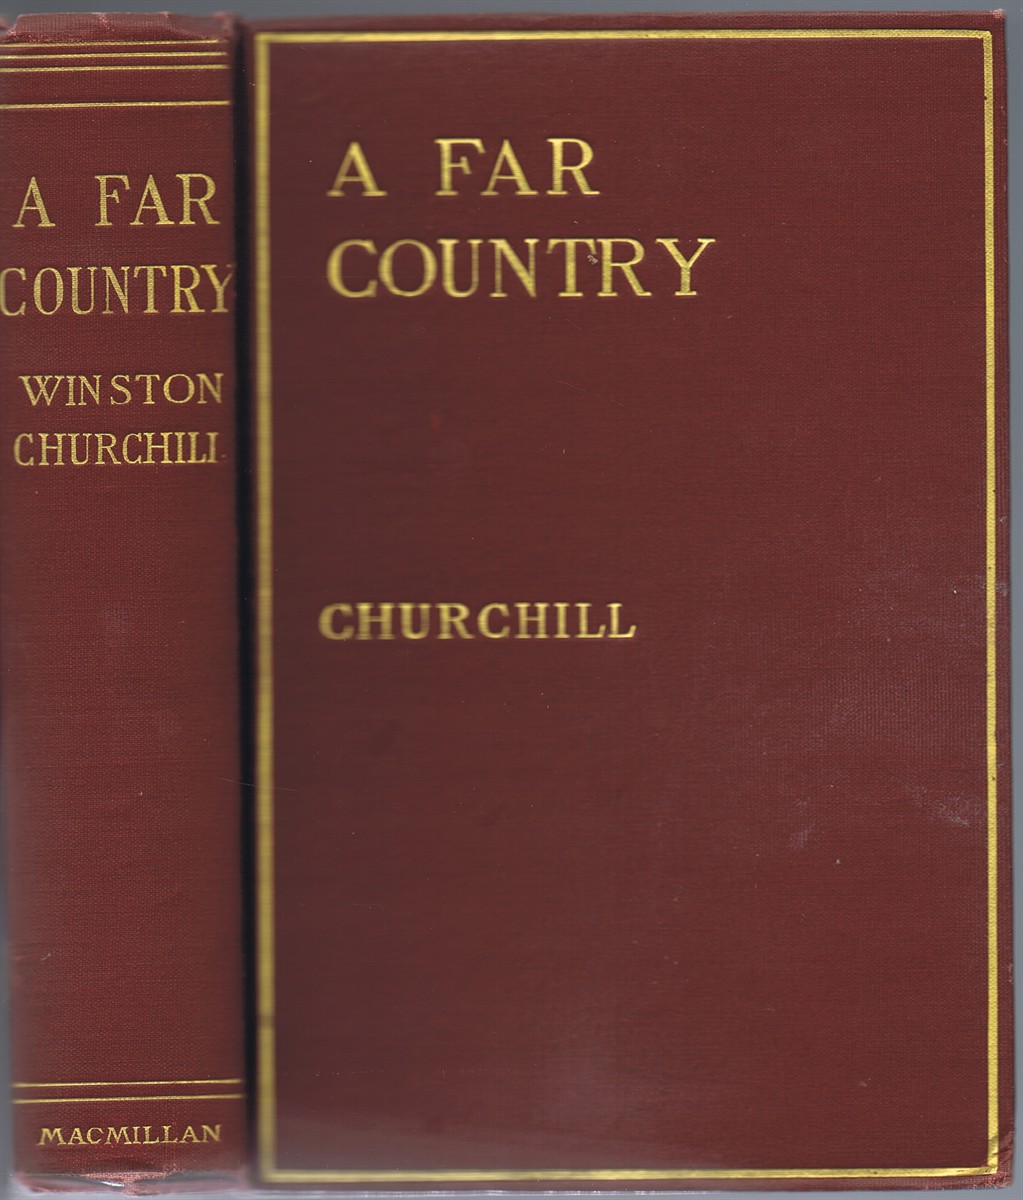 CHURCHILL, WINSON - A Far Country